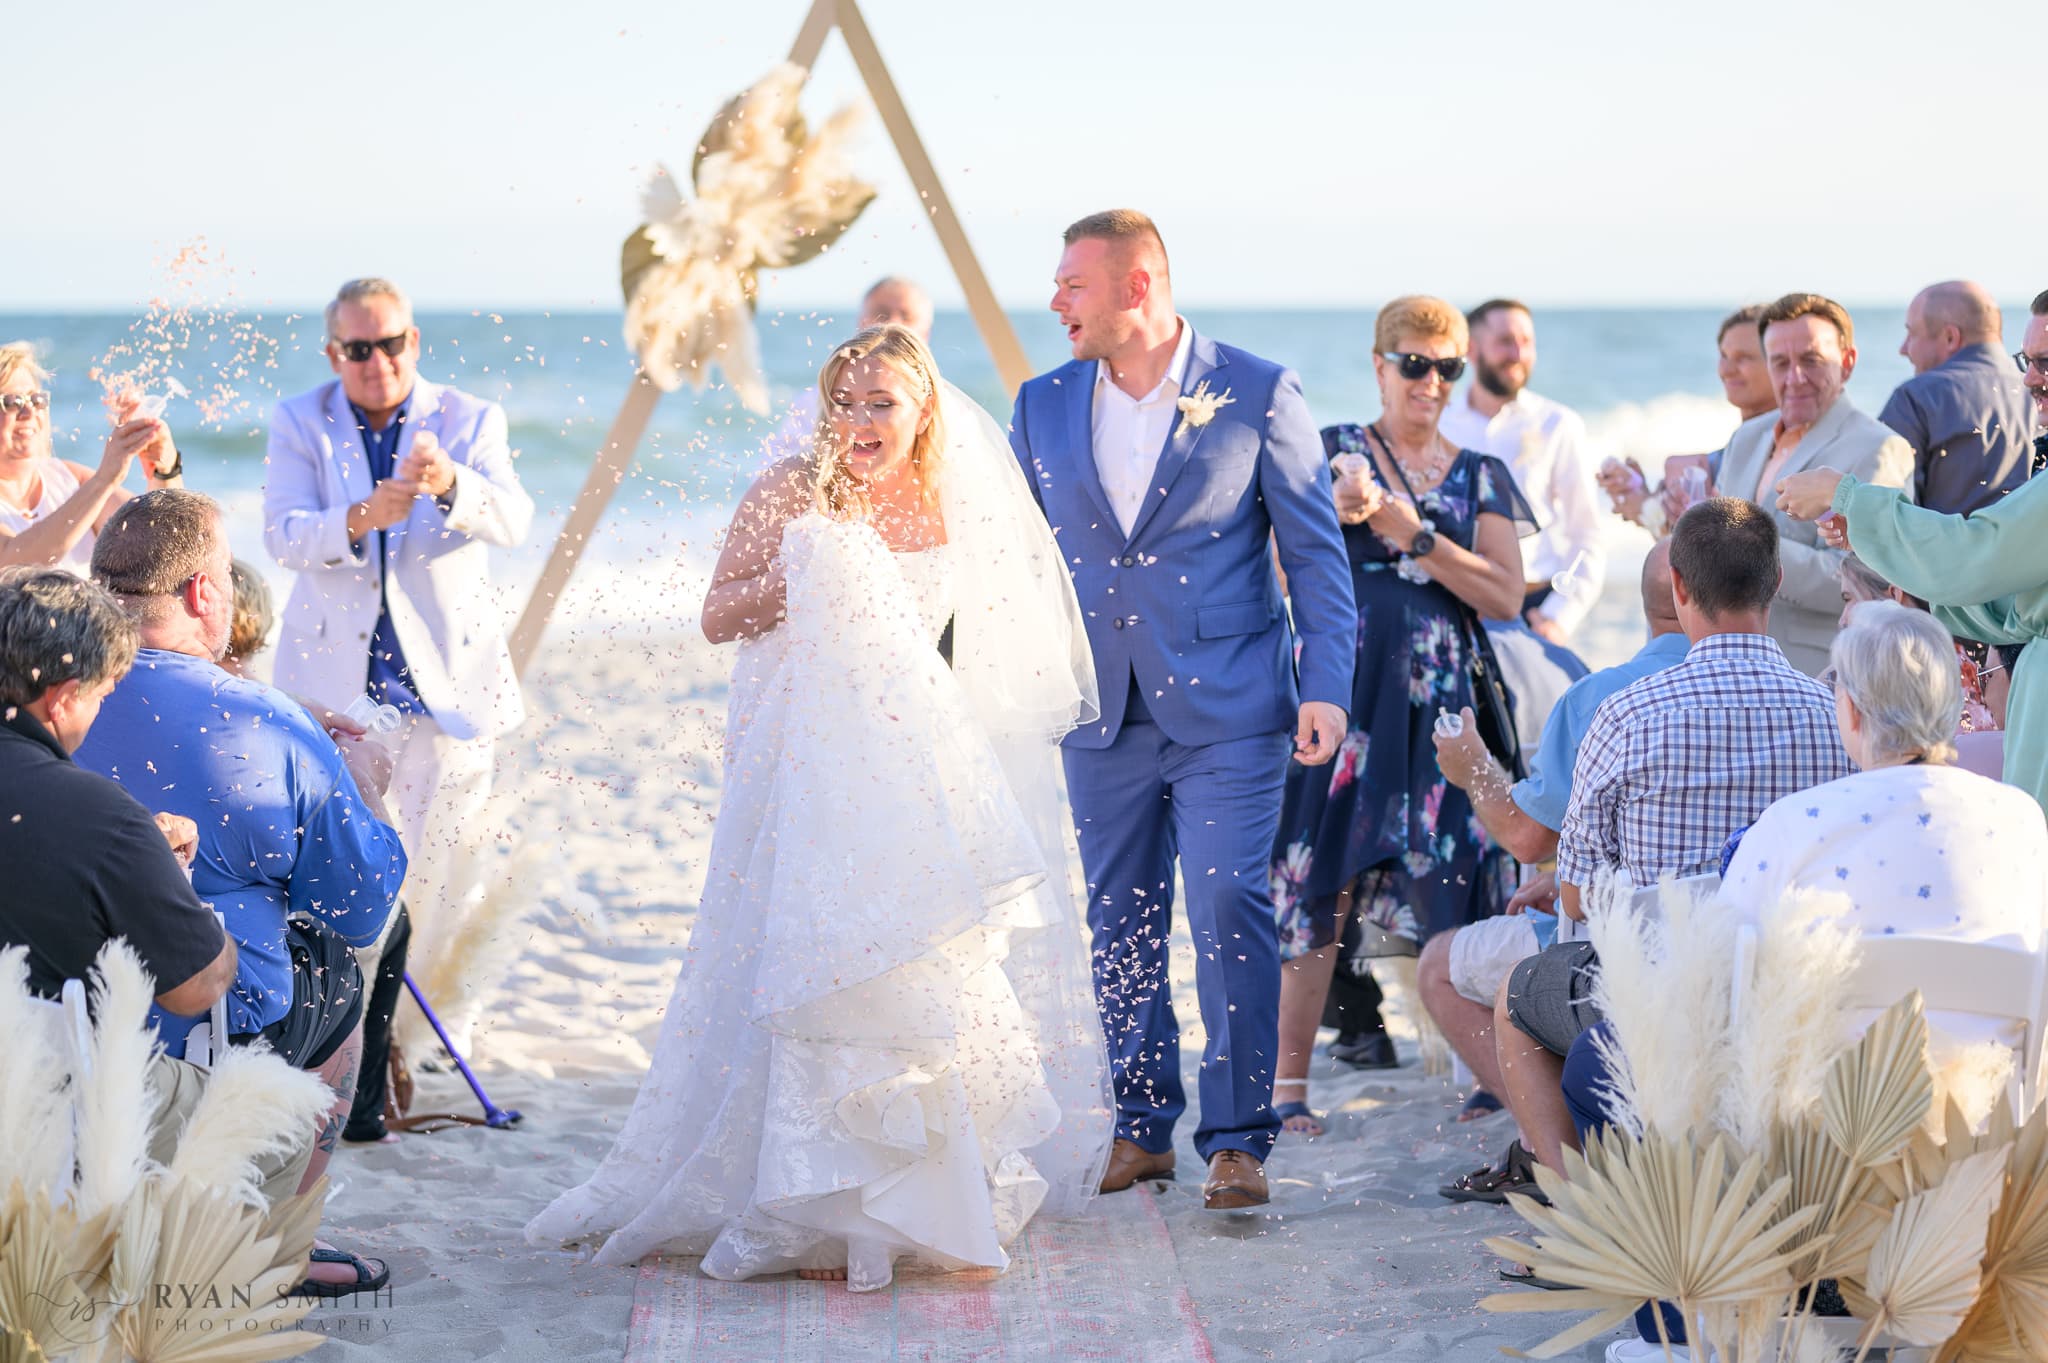 Throwing flower petals while bride and groom walk down the aisle  - North Beach Resort & Villas